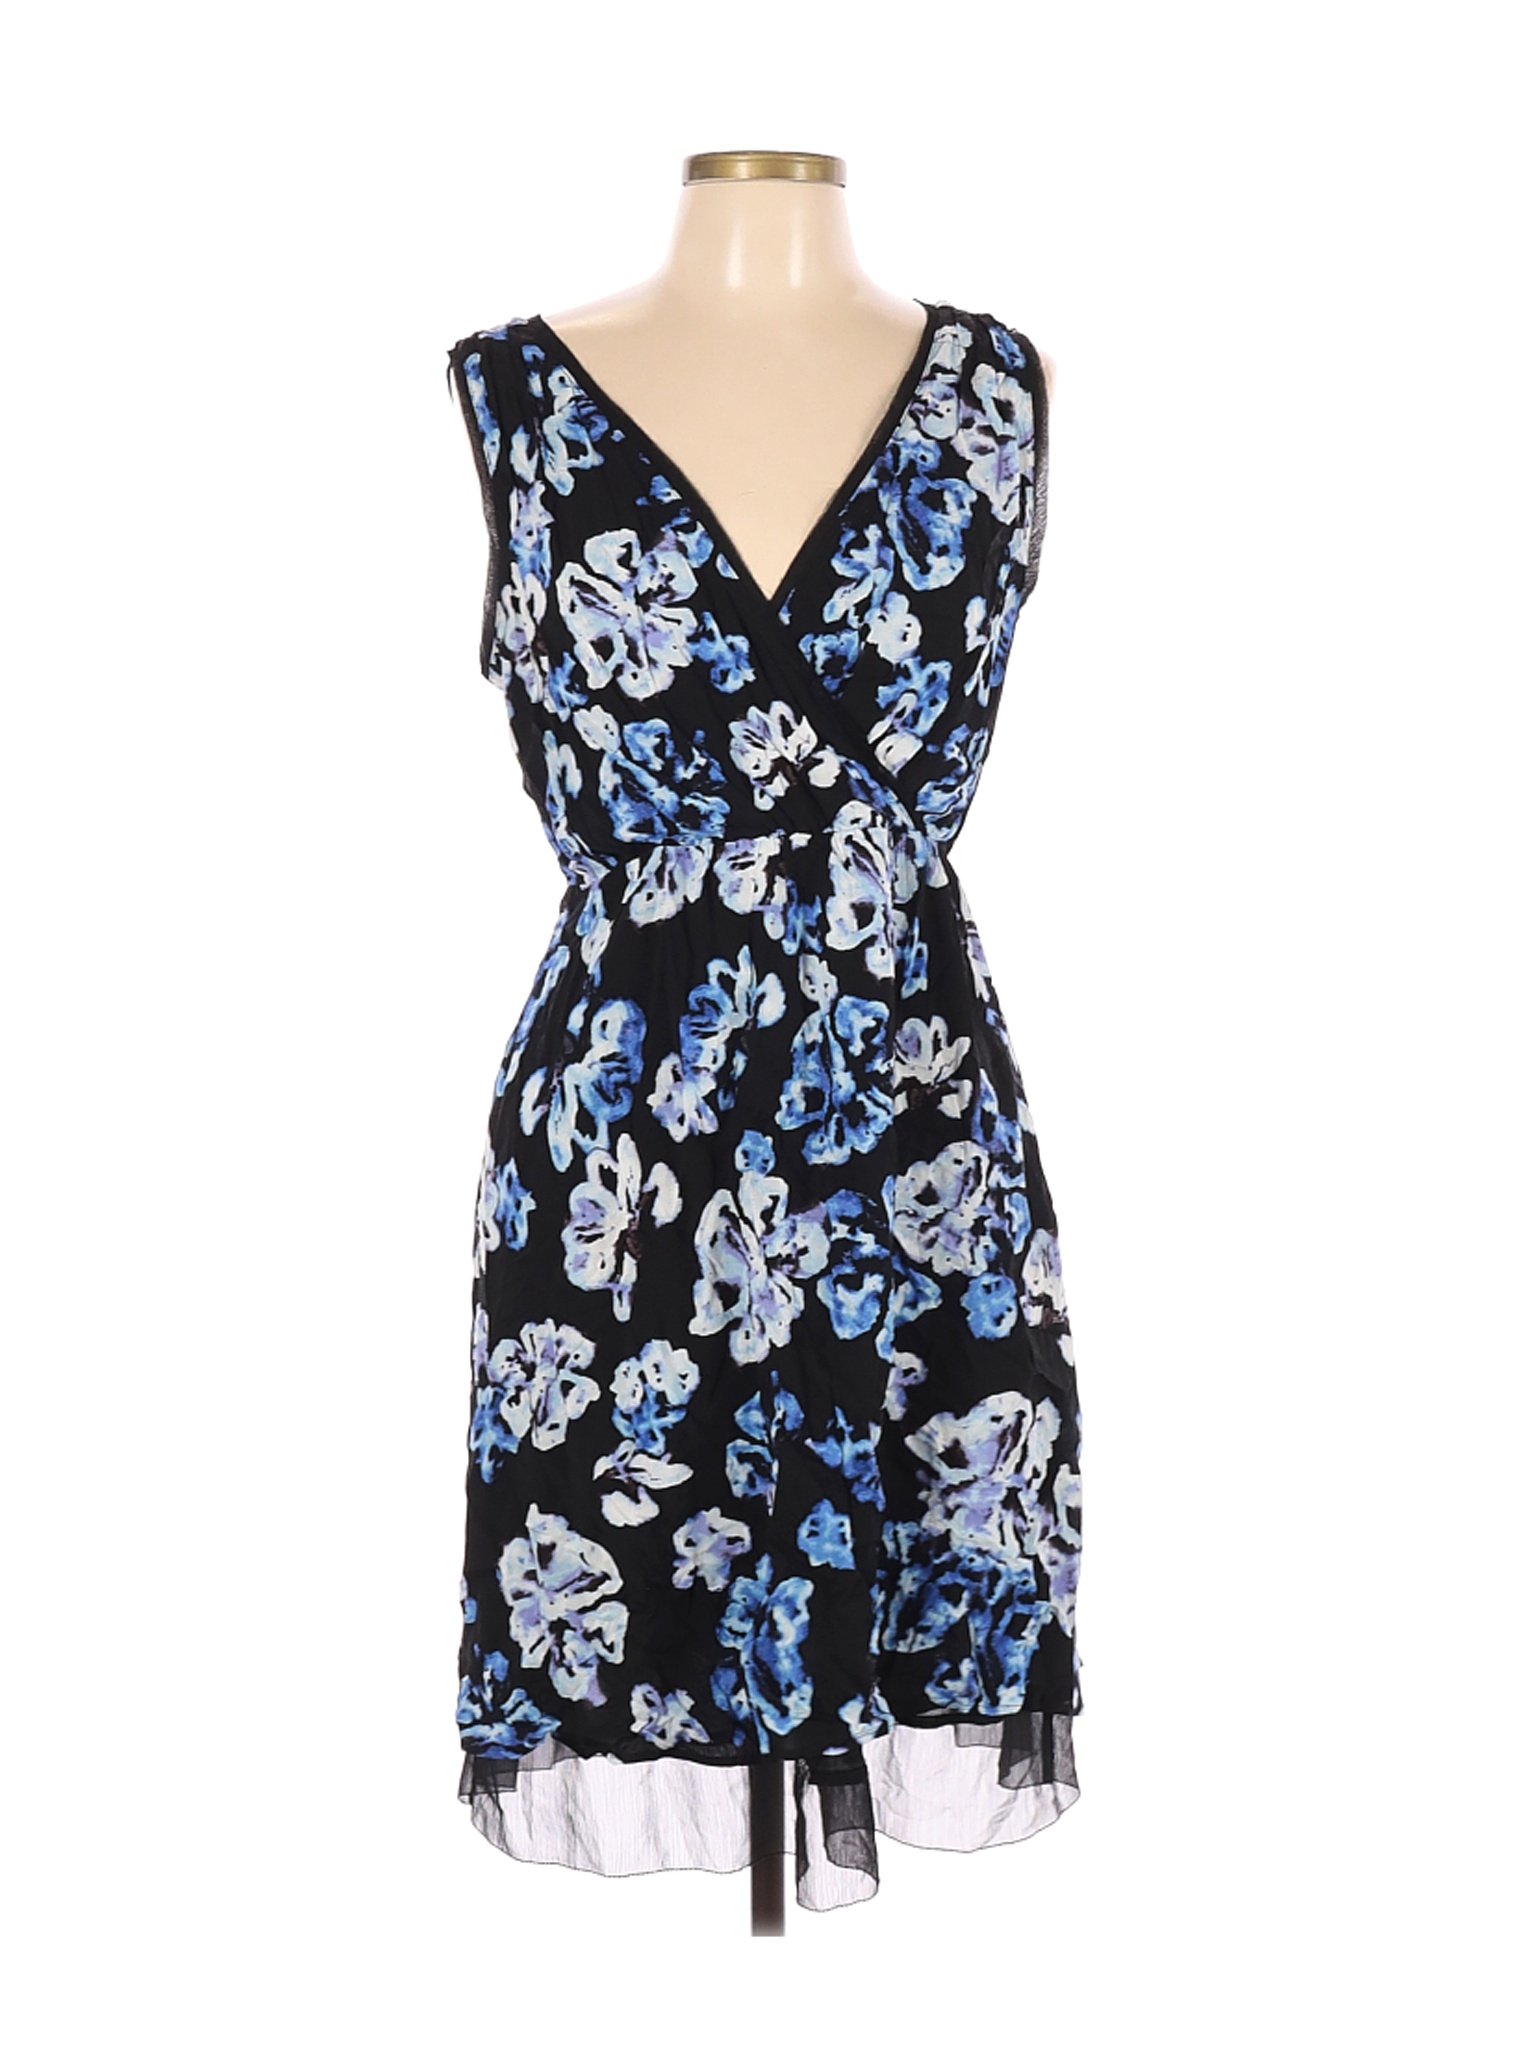 Simply Vera Vera Wang 100% Rayon Floral Black Casual Dress Size M - 62% ...